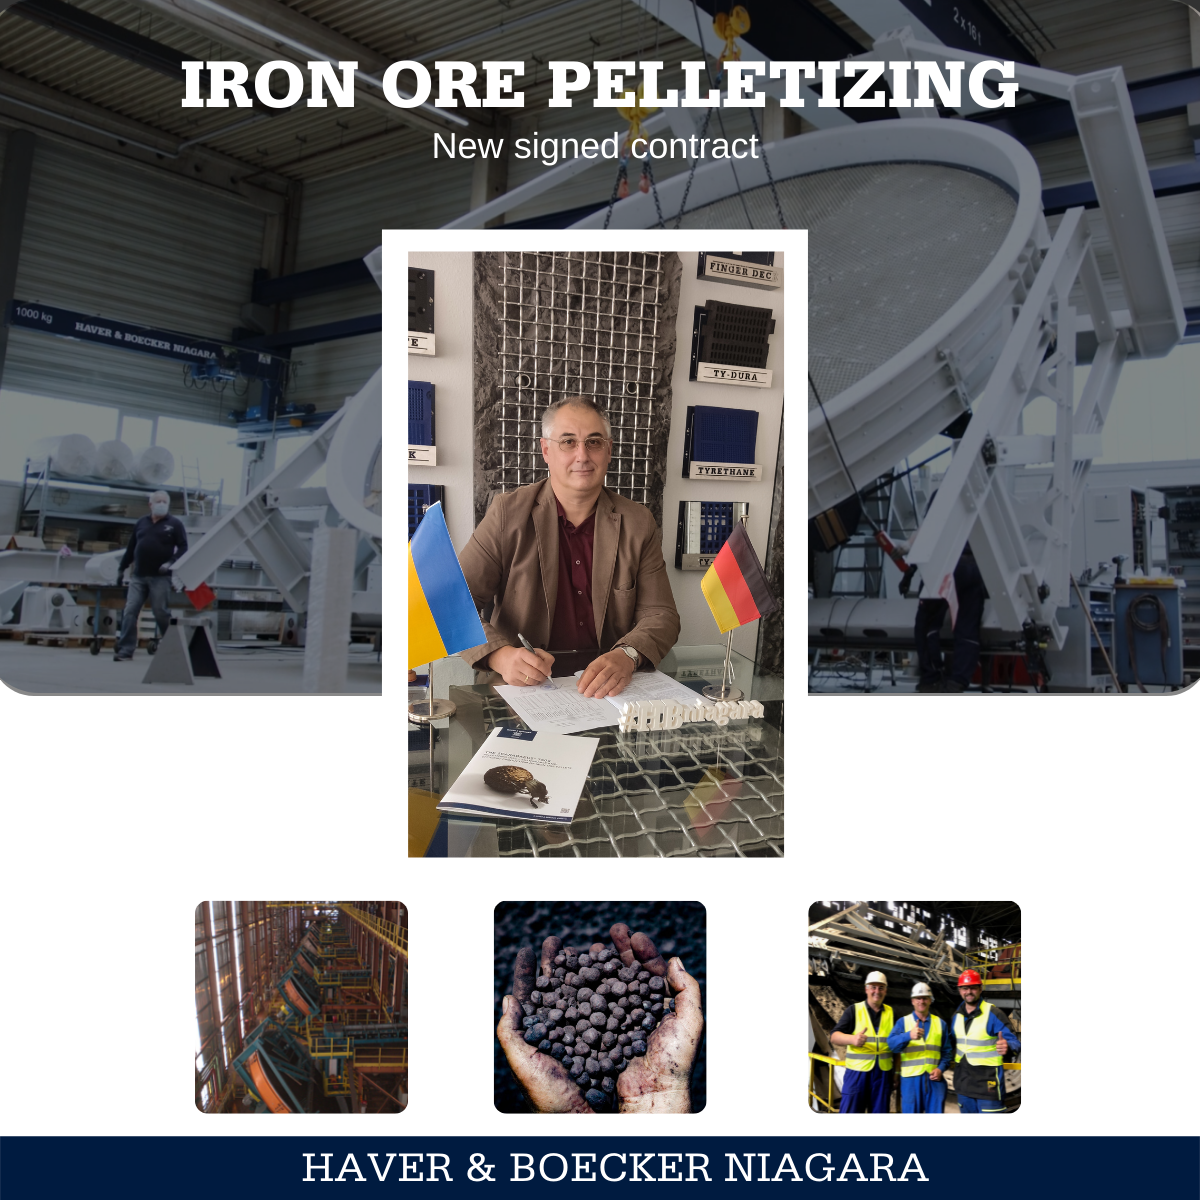 Haver & Boecker Niagara wins a major contract in the field of iron ore pelletizing